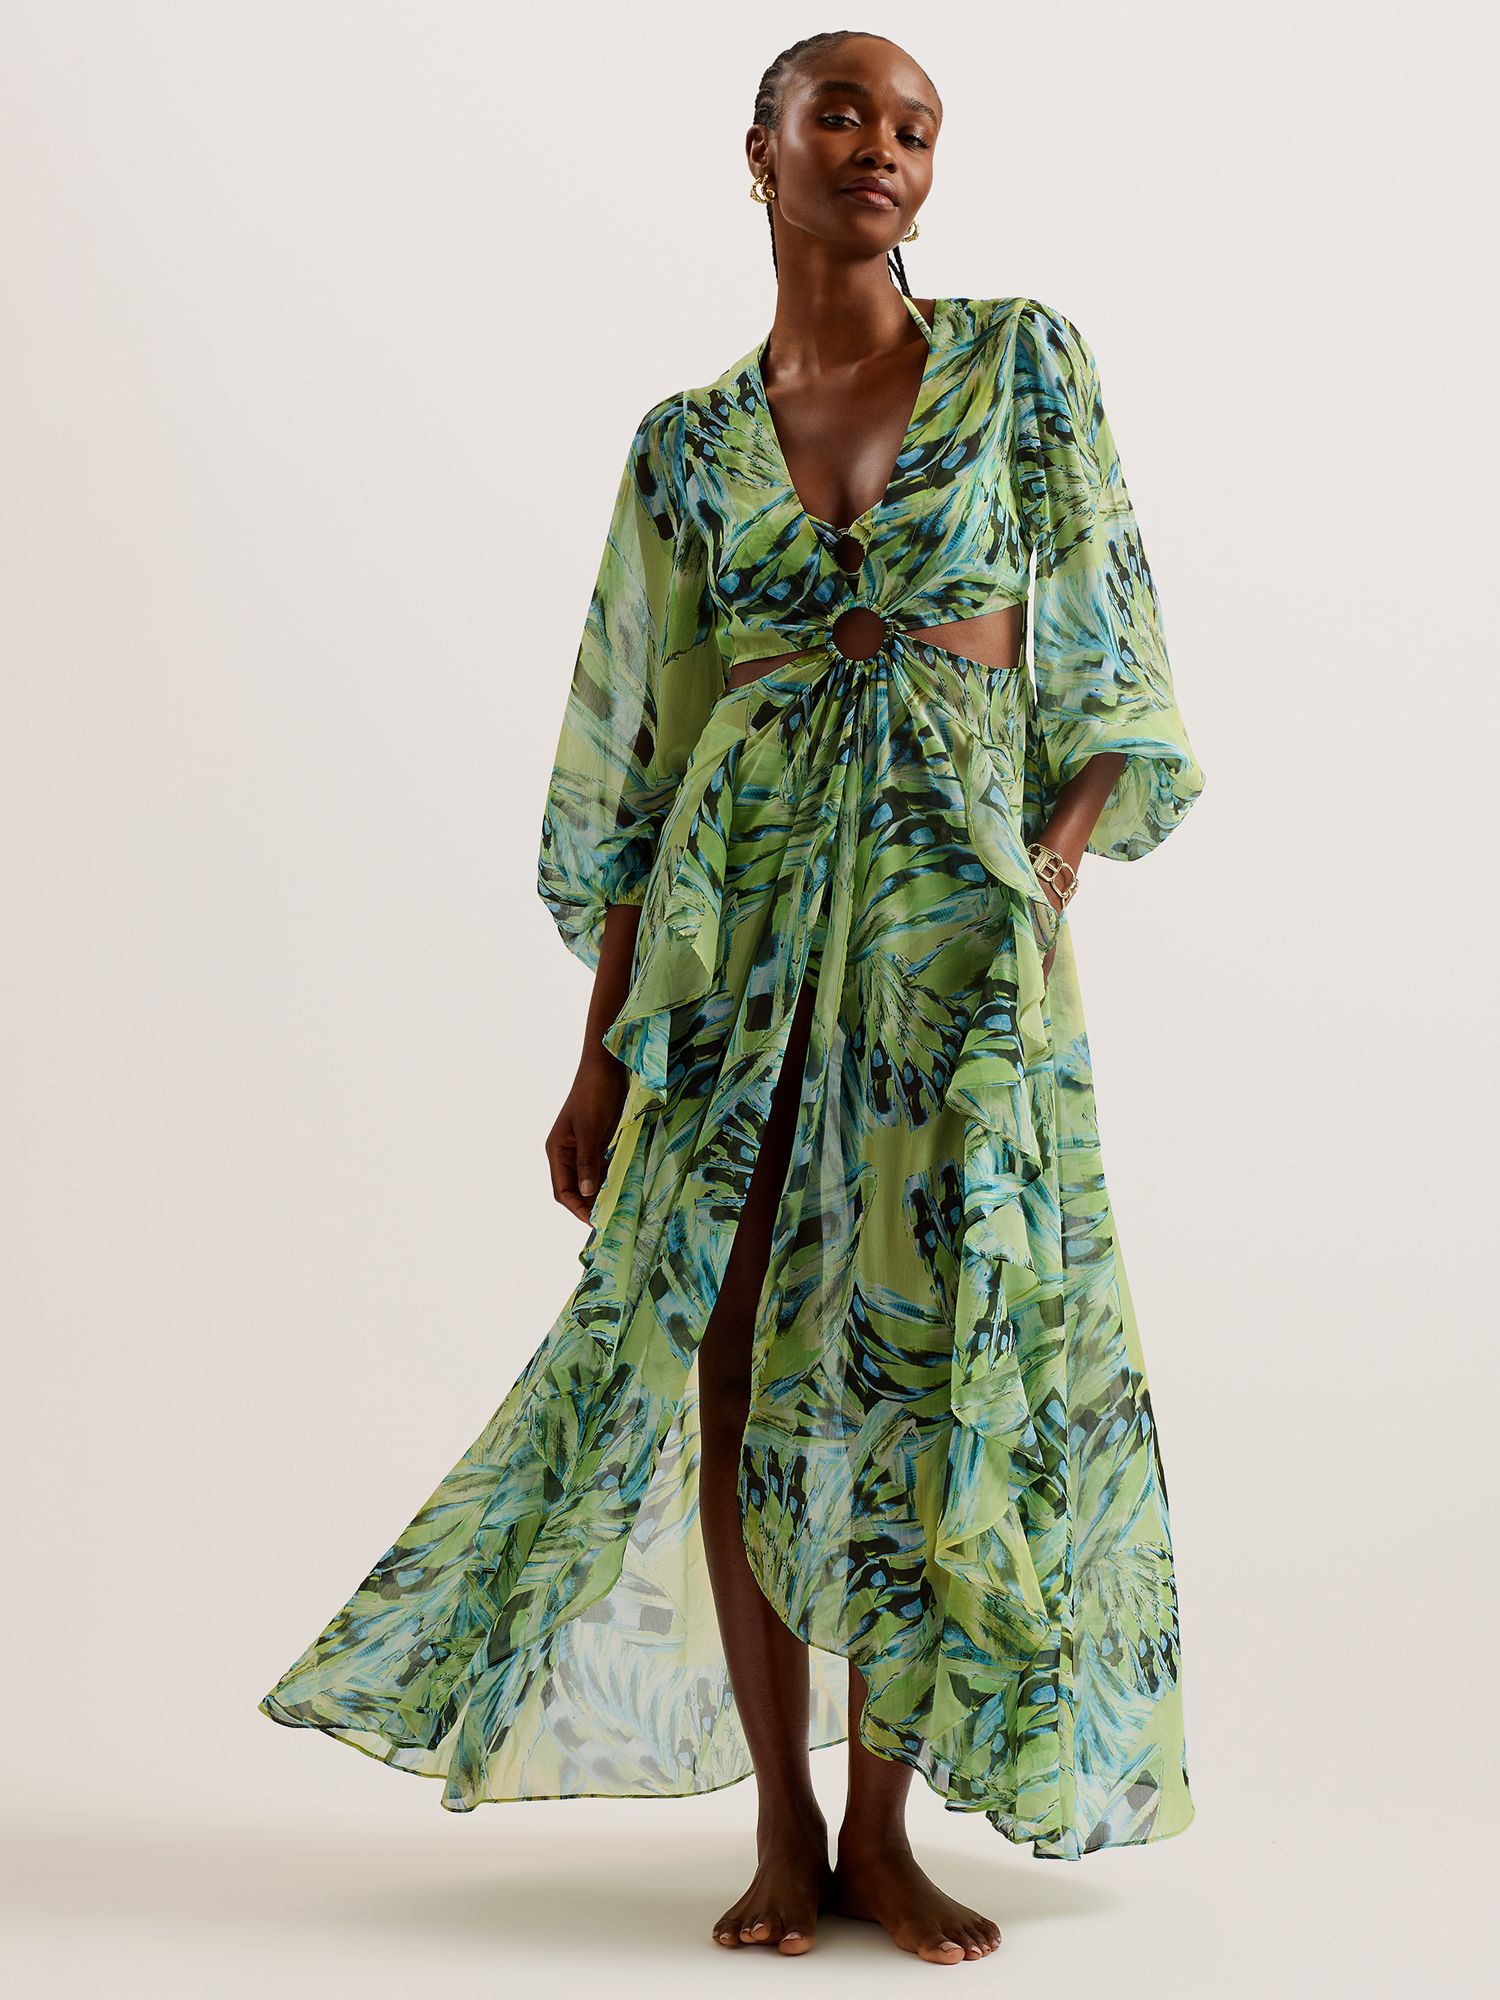 Ted Baker Ottley Abstract Print Cutout Maxi Beach Dress, Lime/Multi, L